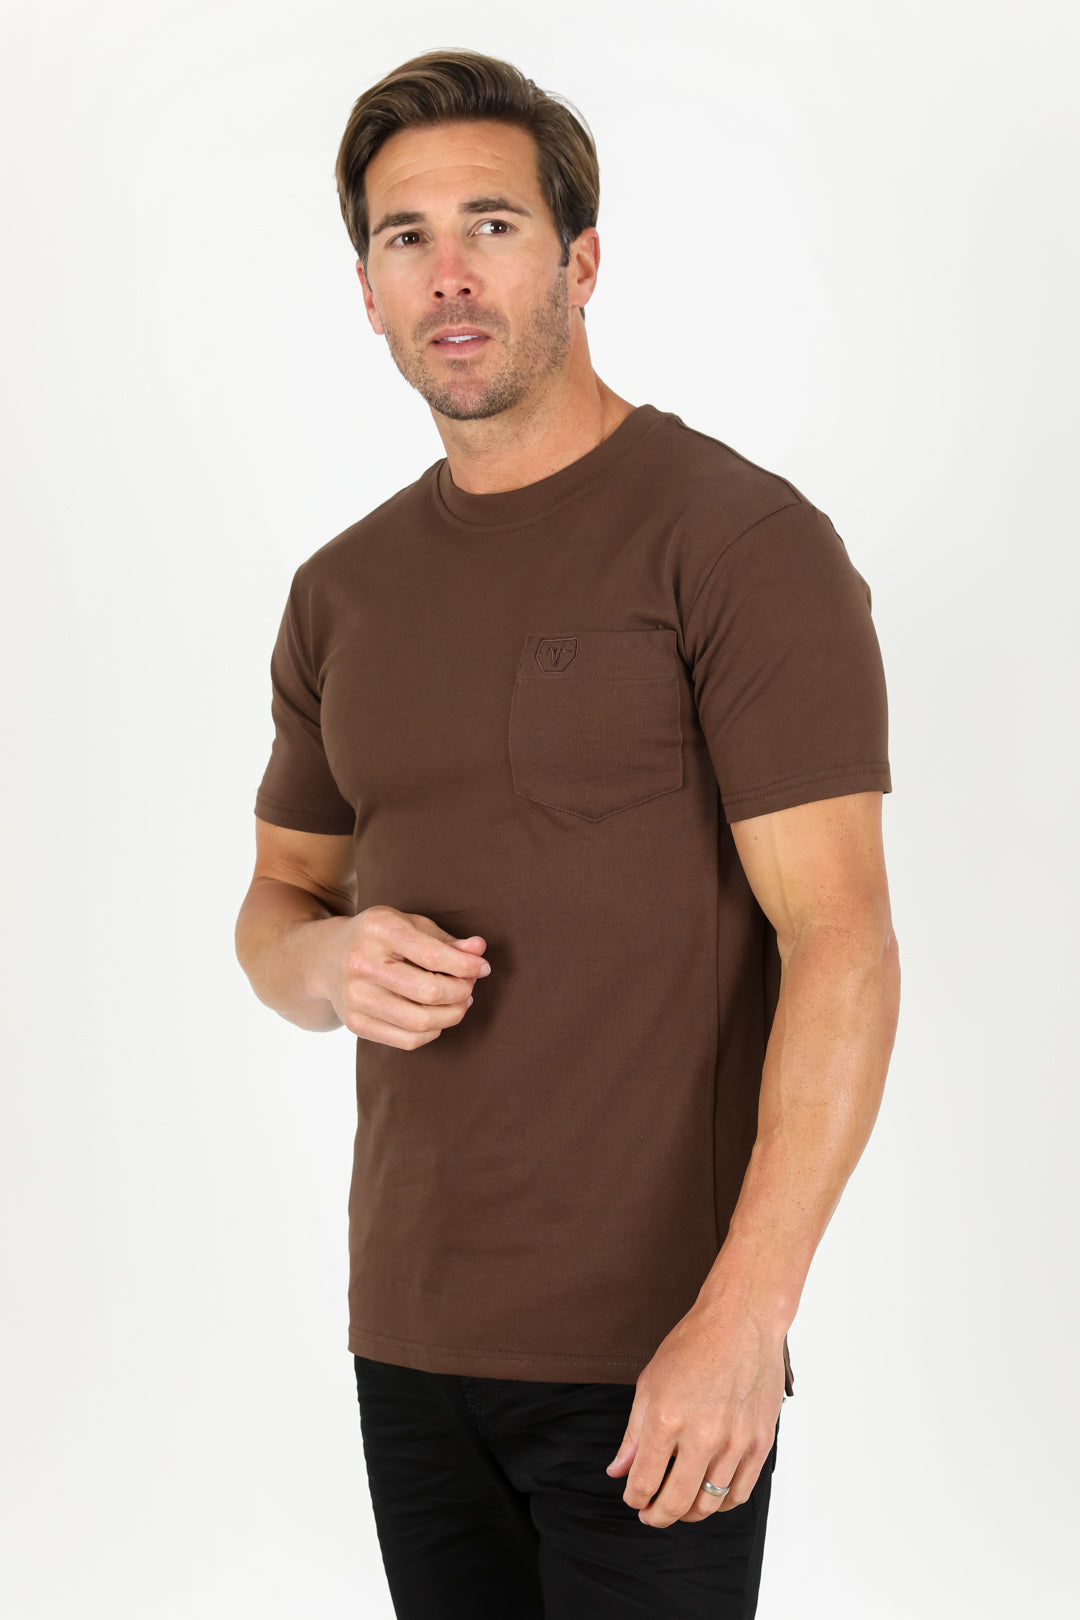 Cotton Knit T-Shirt - Brown